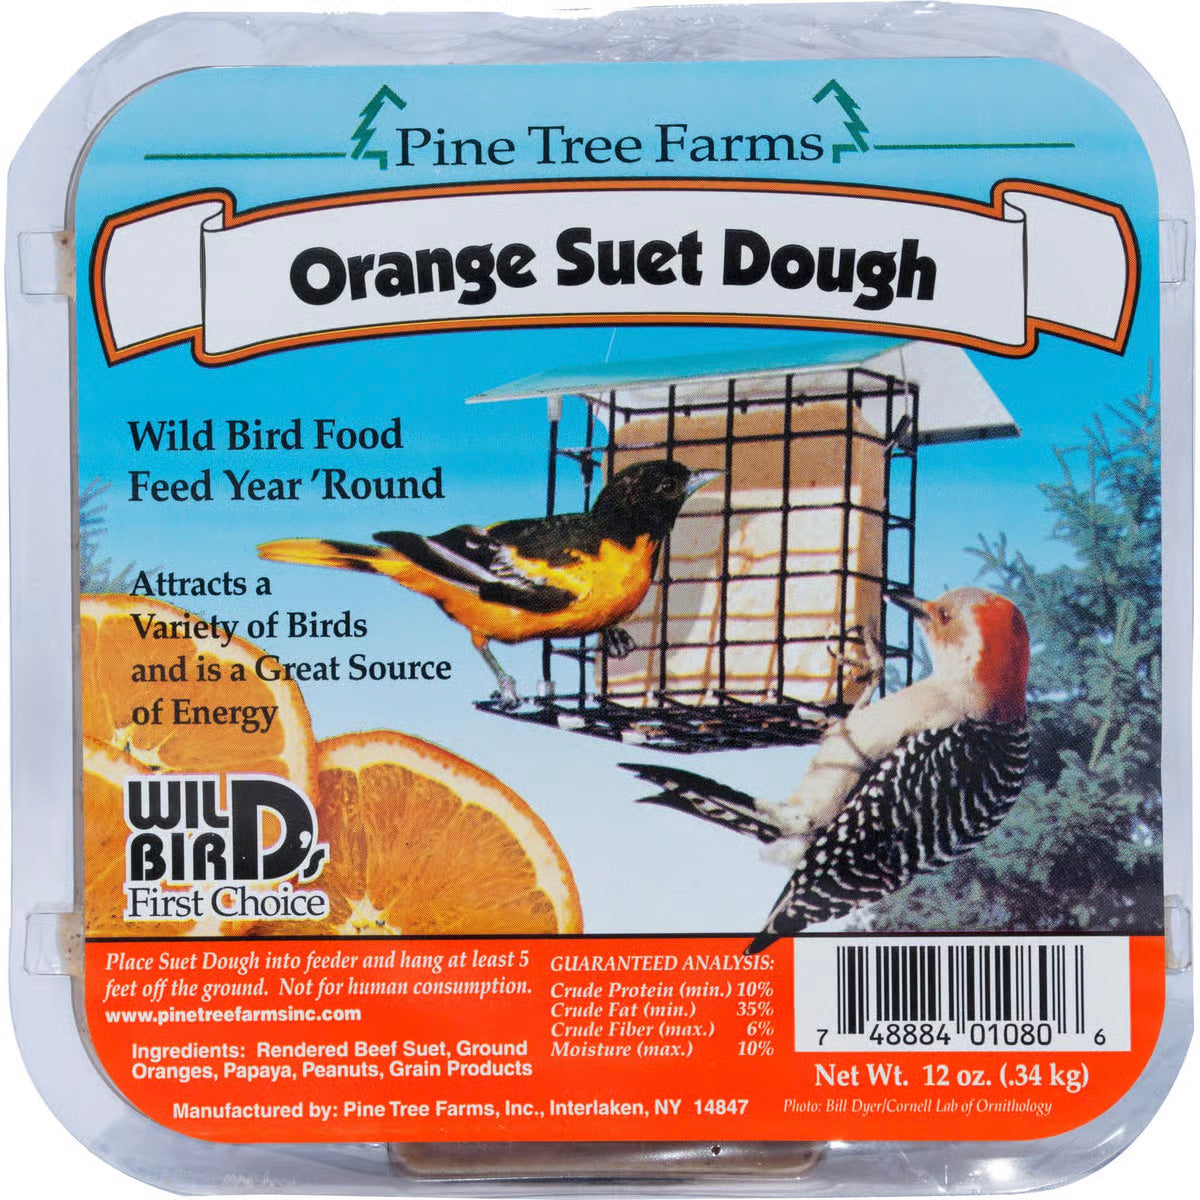 Pine Tree Farms Orange Suet Dough Cake 12oz. - Case of 12